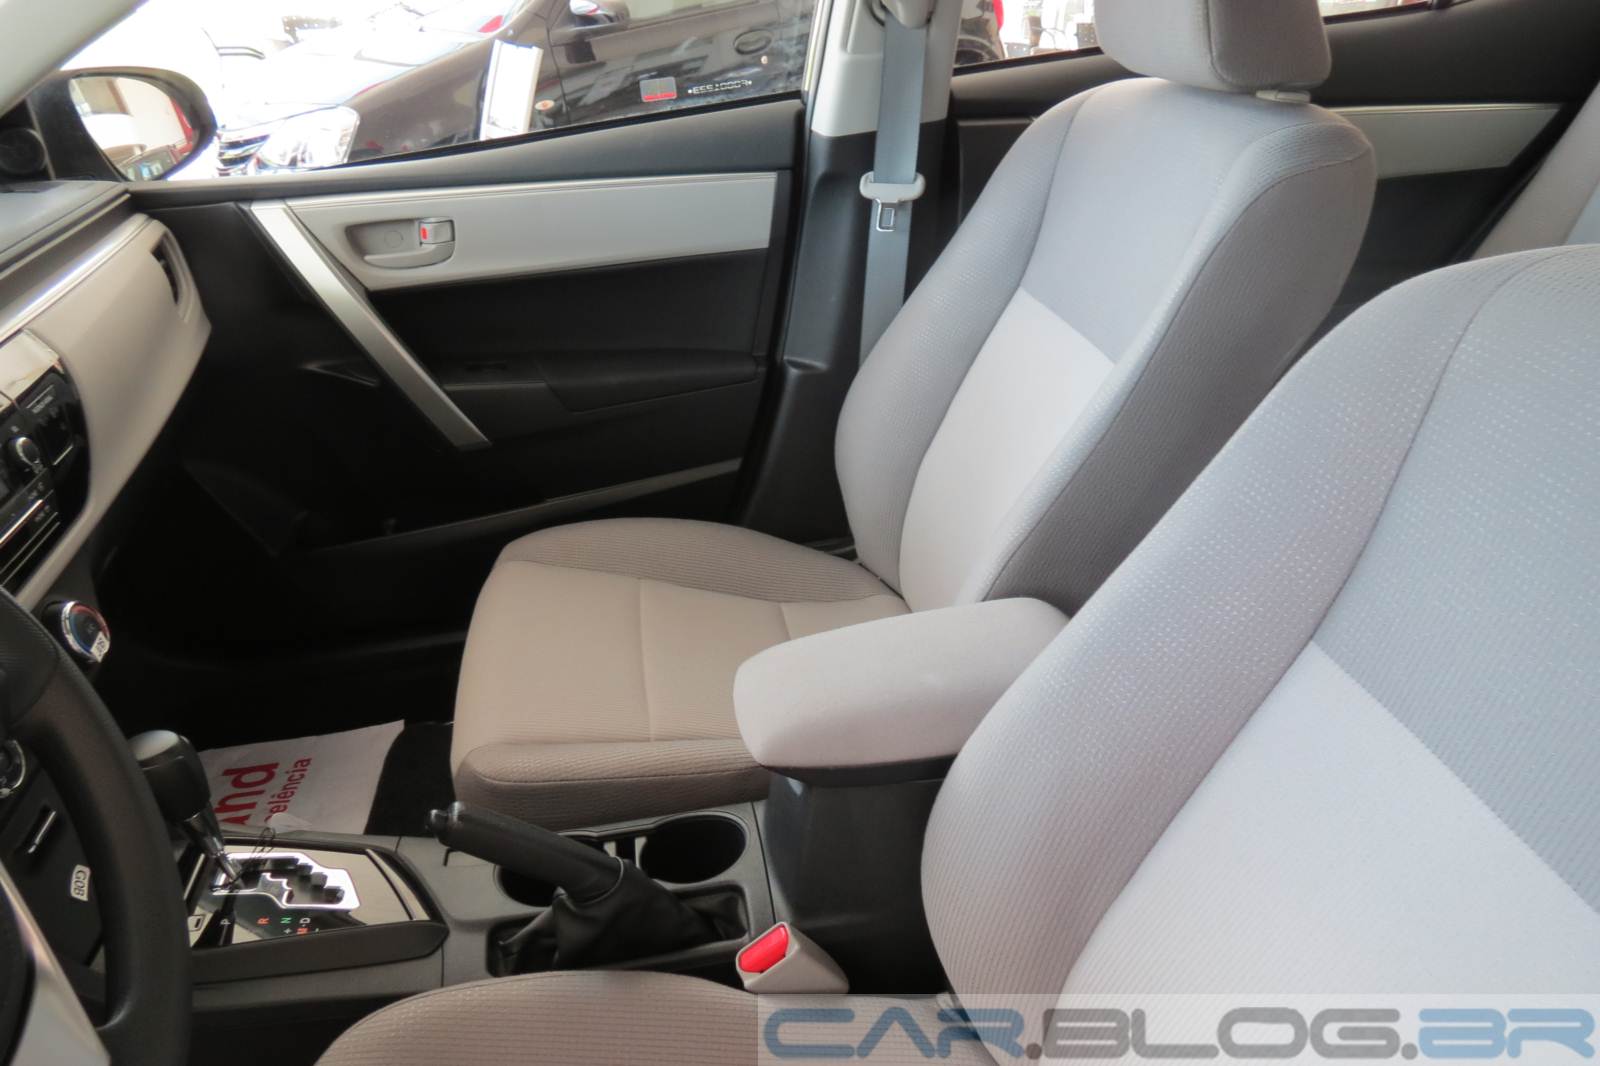 Novo Toyota Corolla 2015 - interior - painel